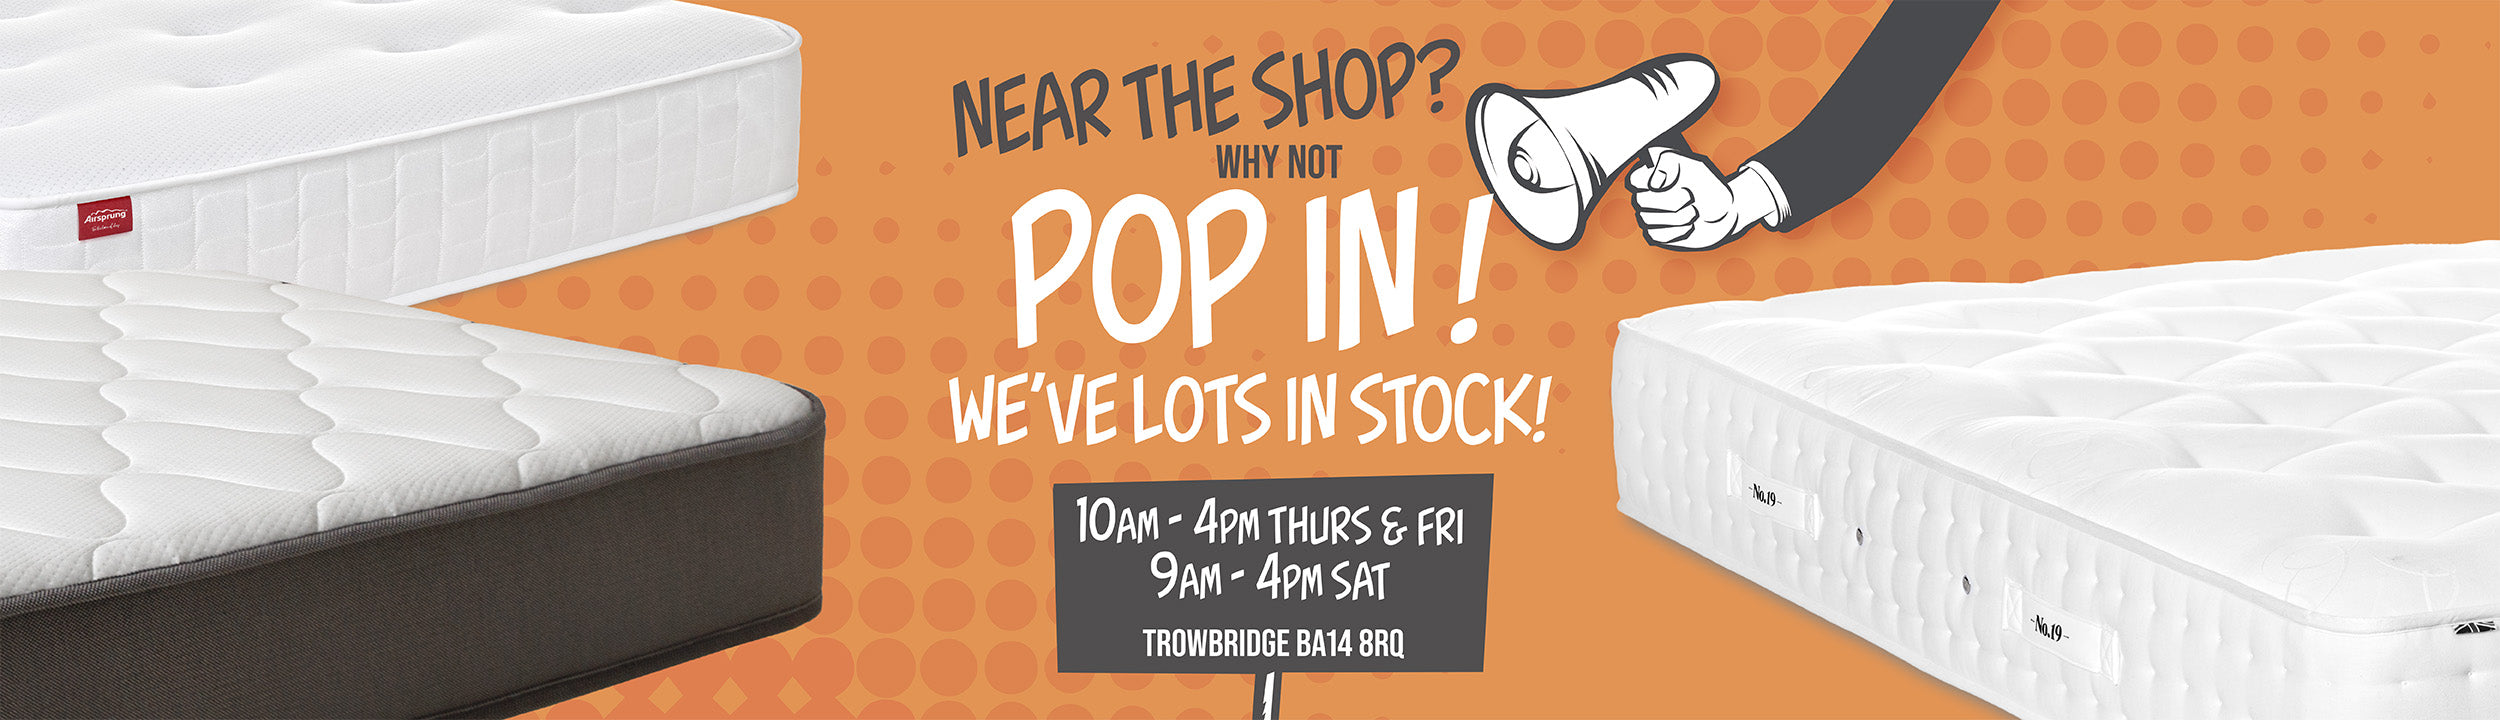 Near The Shop? Why Not Pop In. 10am-4pm Thurs & Fri. 9am-4pm Sat